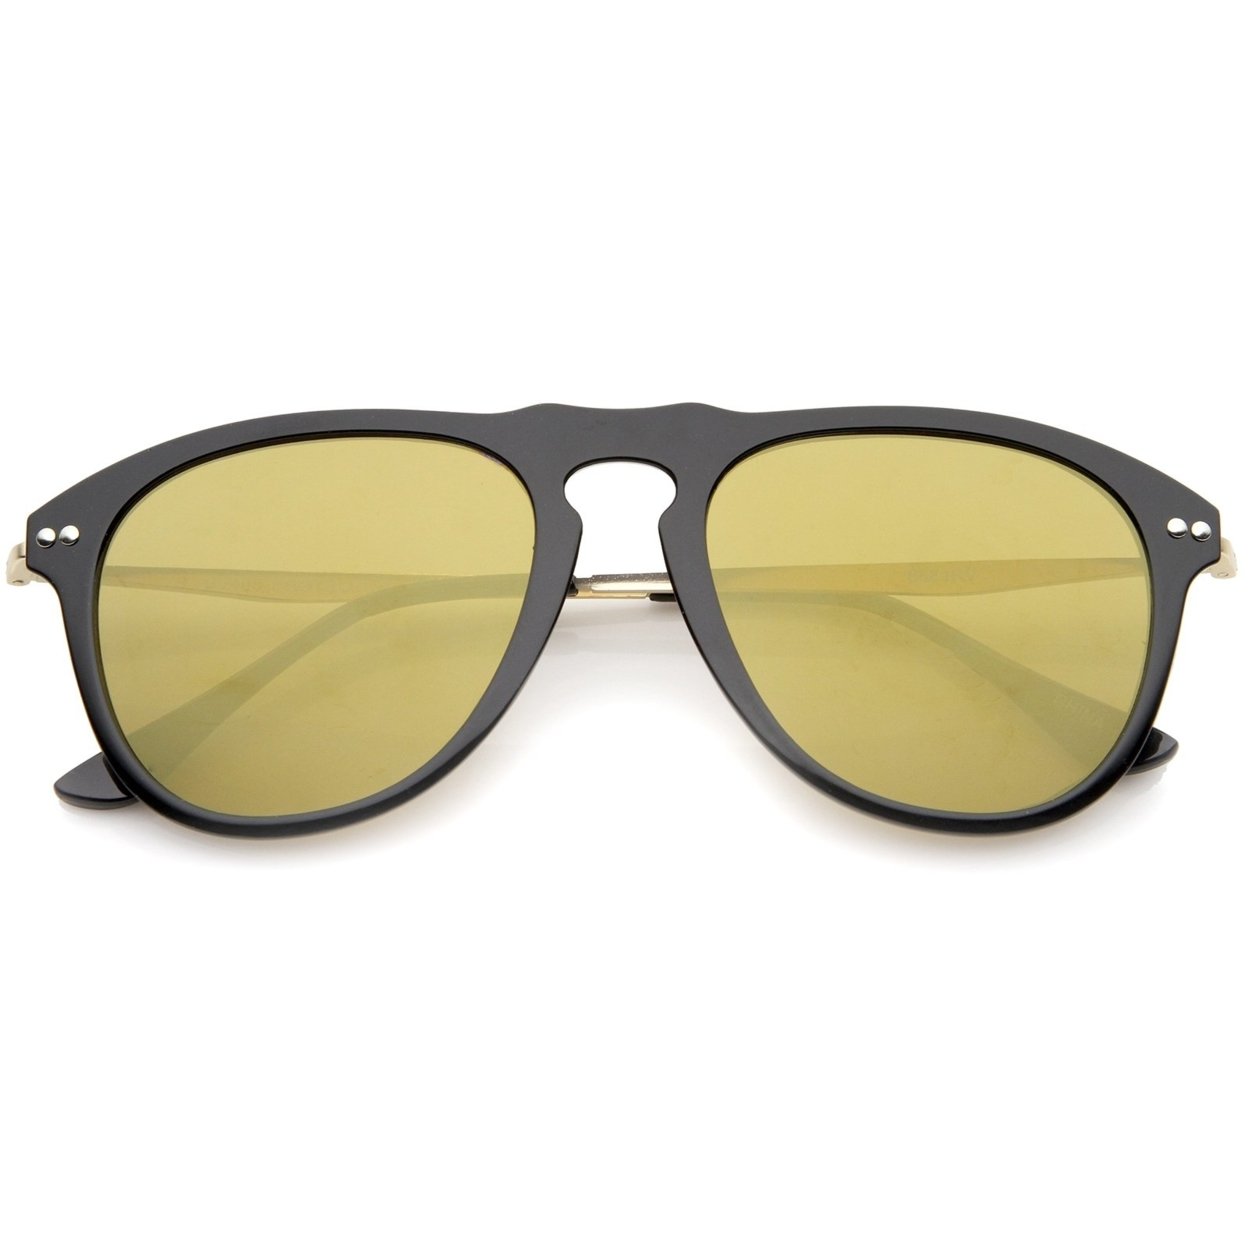 Modern Keyhole Bridge Horn Rimmed Colored Mirror Lens Aviator Sunglasses 53mm - Tortoise-Gold / Purple Mirror